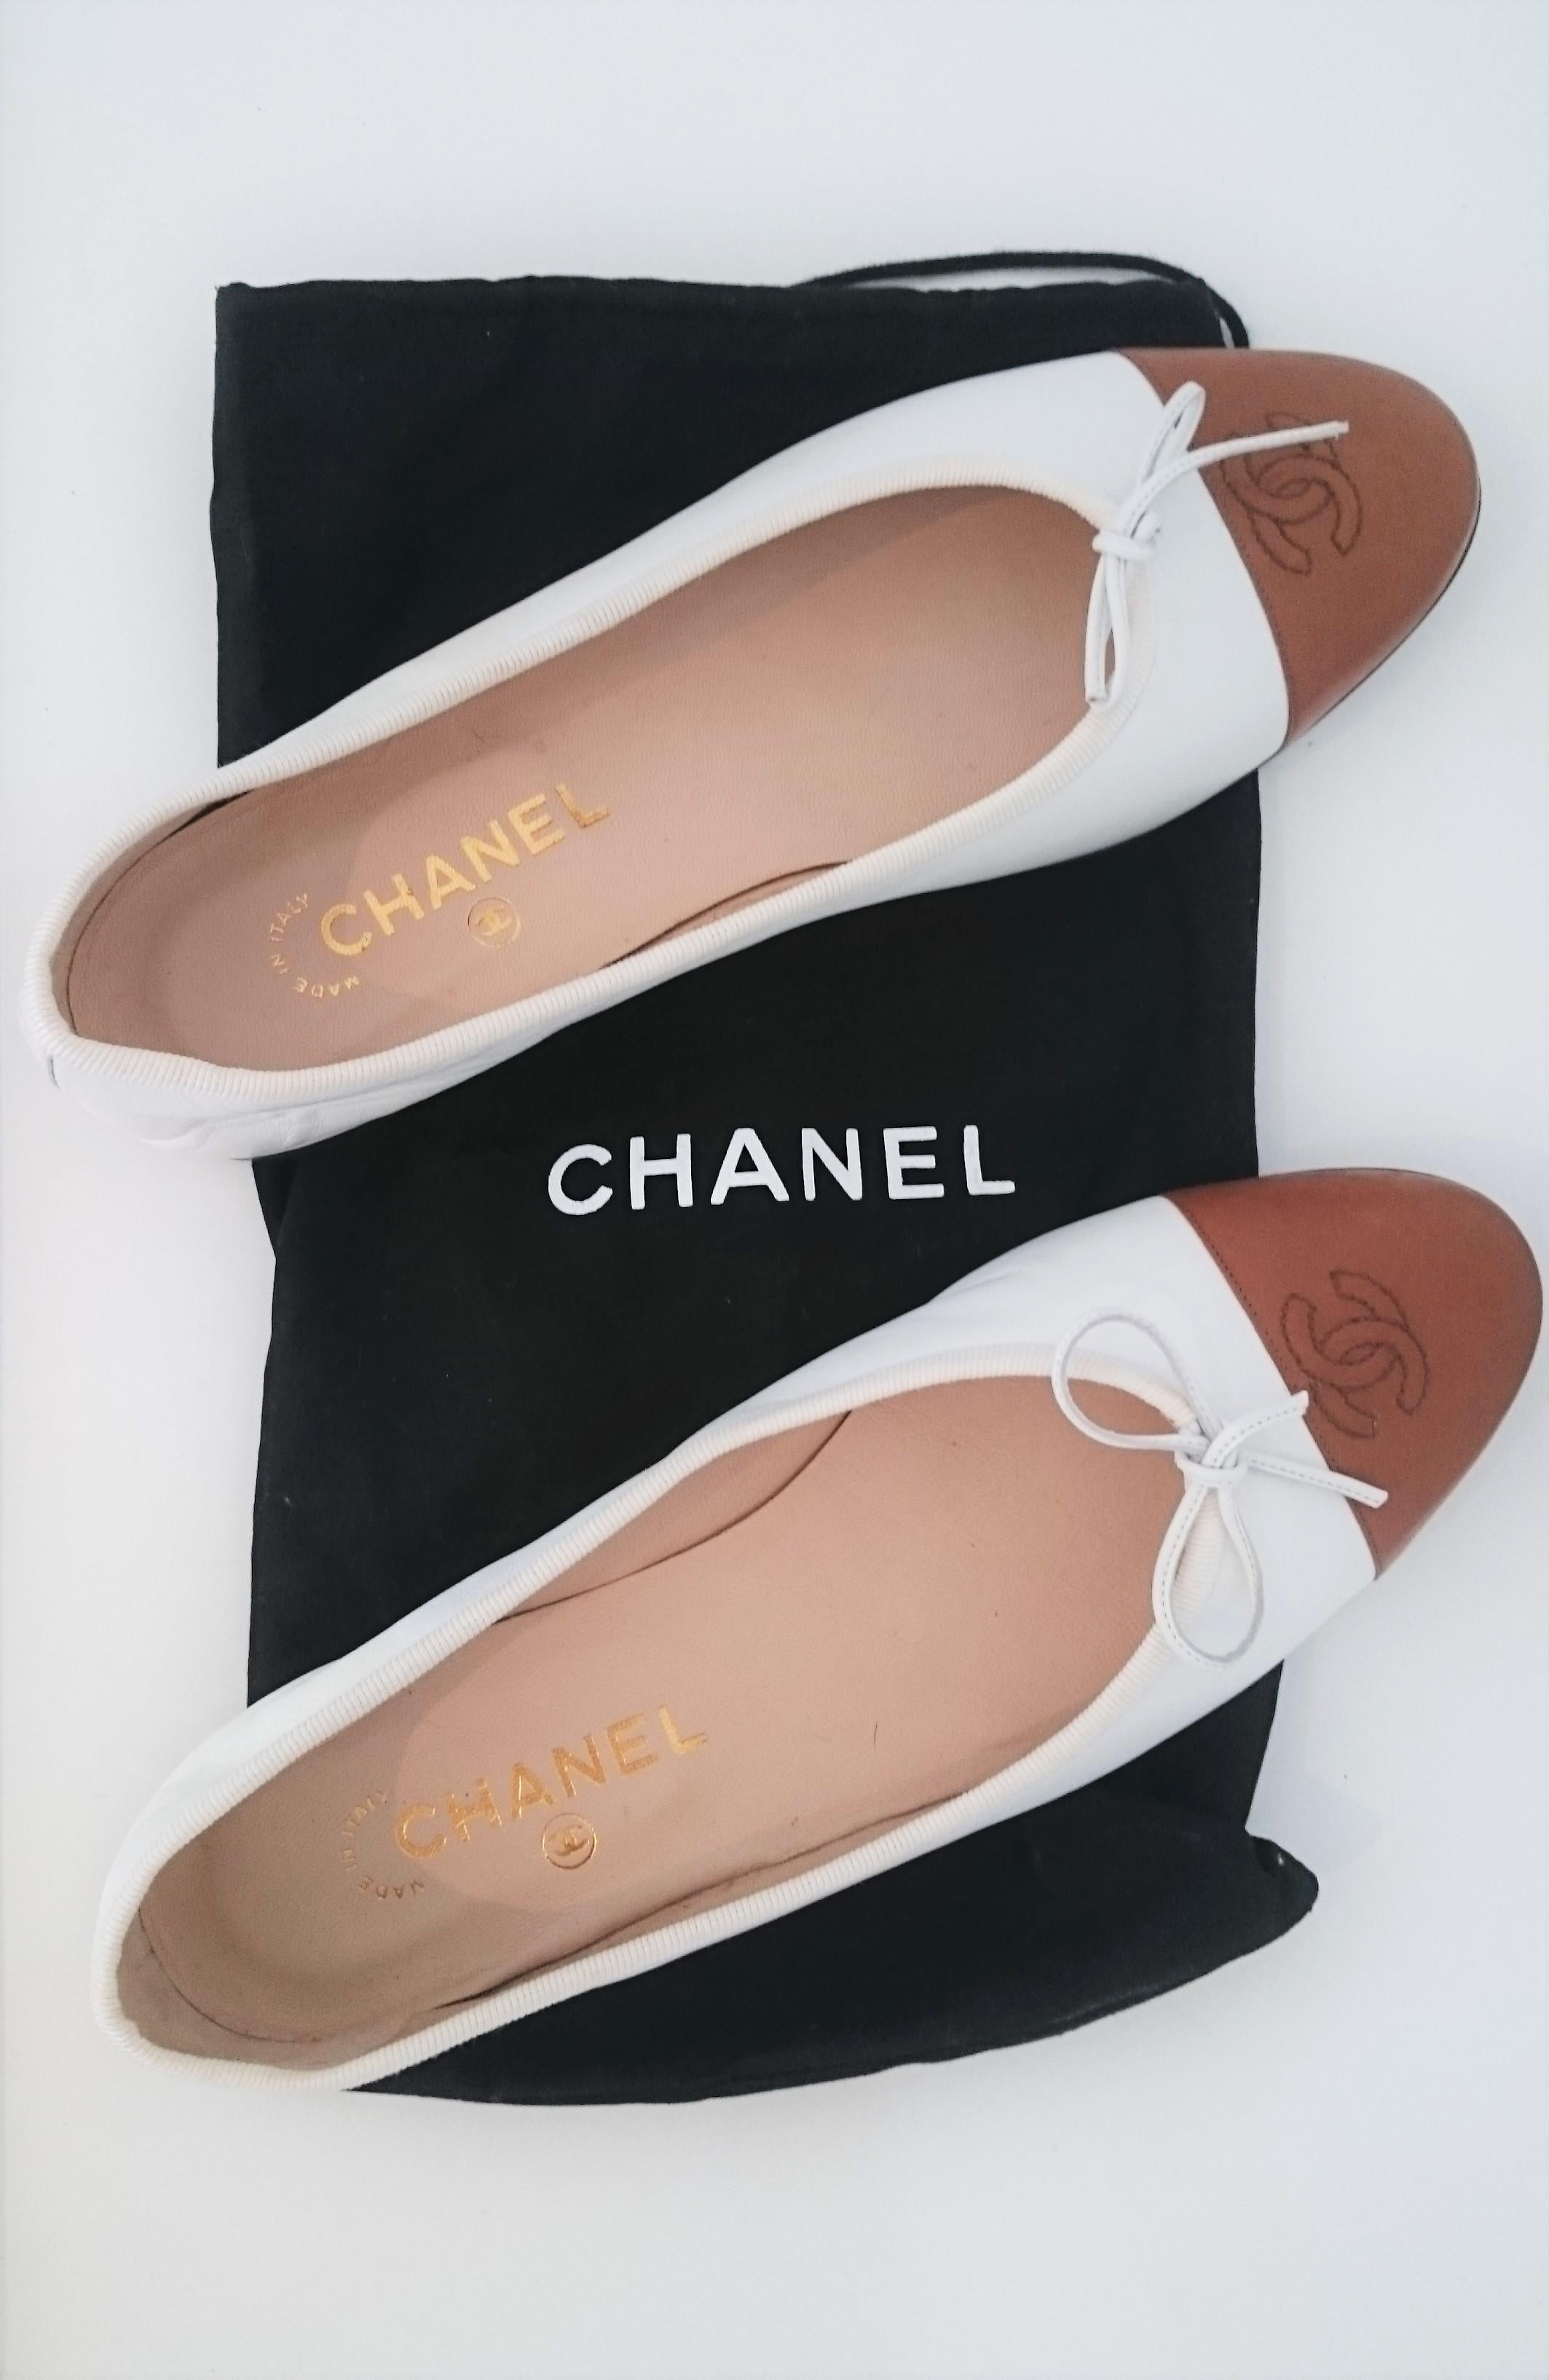 Gray Chanel Ballerina Ballet Flats - Bicolor White and Caramel - NEW, size 40 1/2